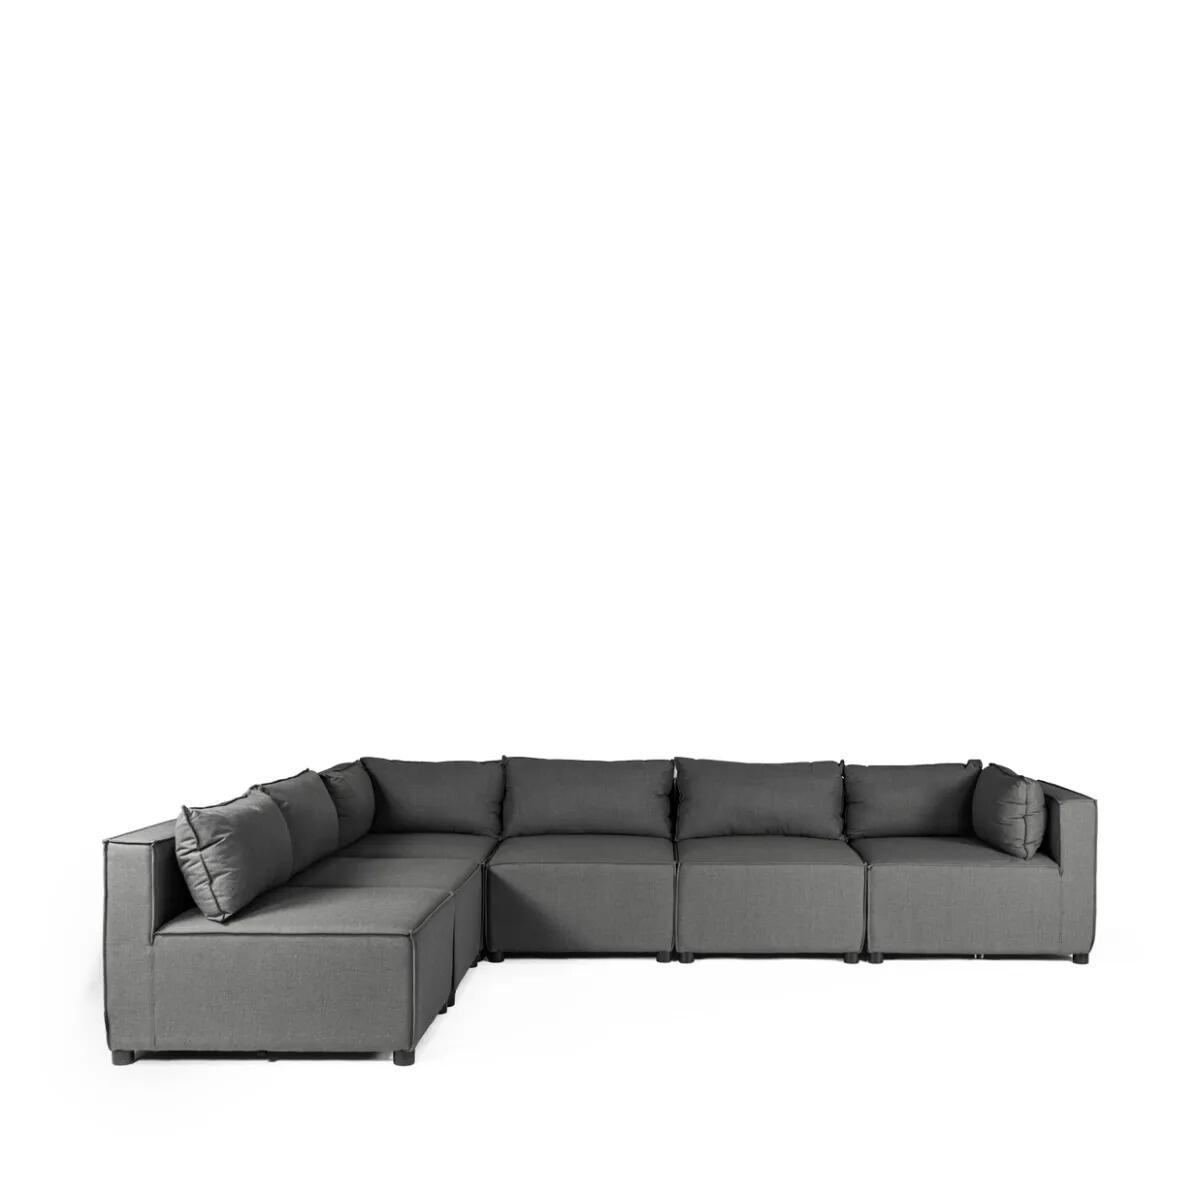 grey all weather fabric garden lounge sofa set corner outdoor 6 piece set in sunbrella all weather fabric